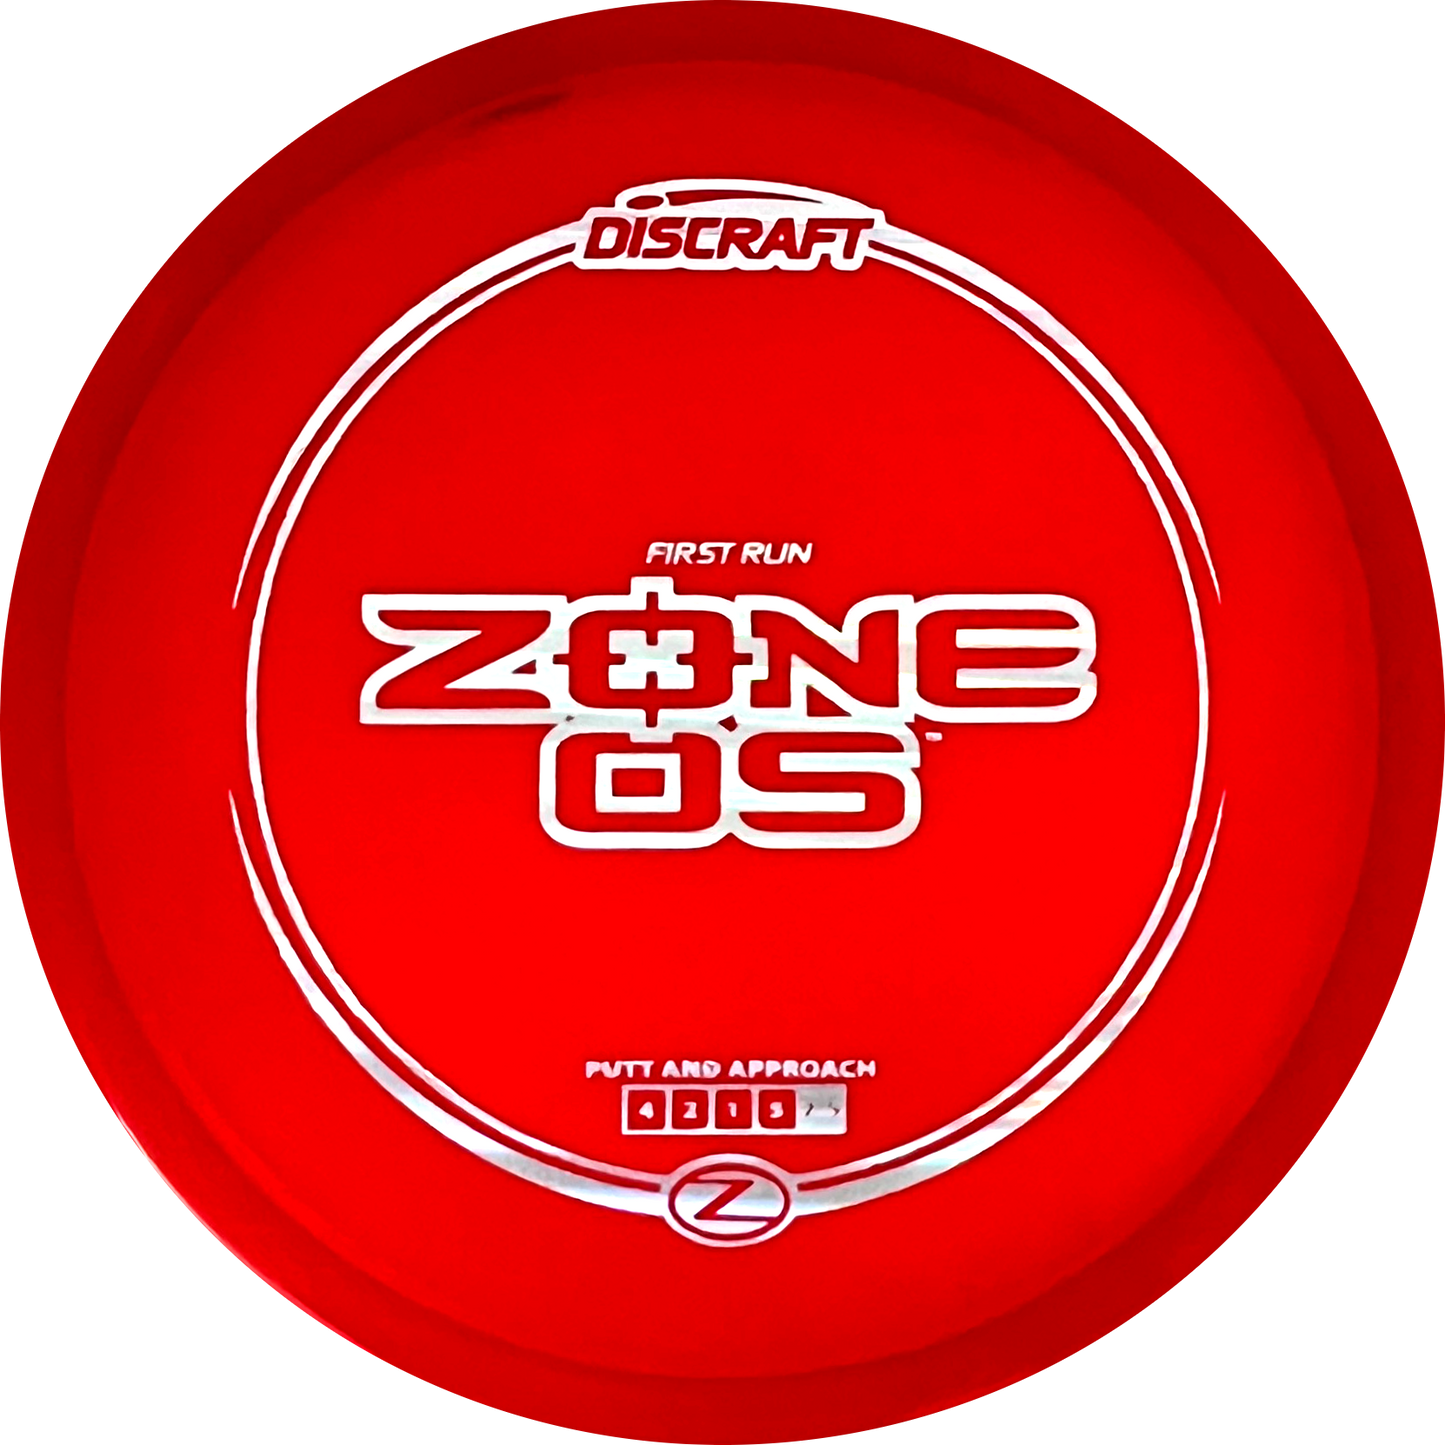 Z-line Zone OS First Run